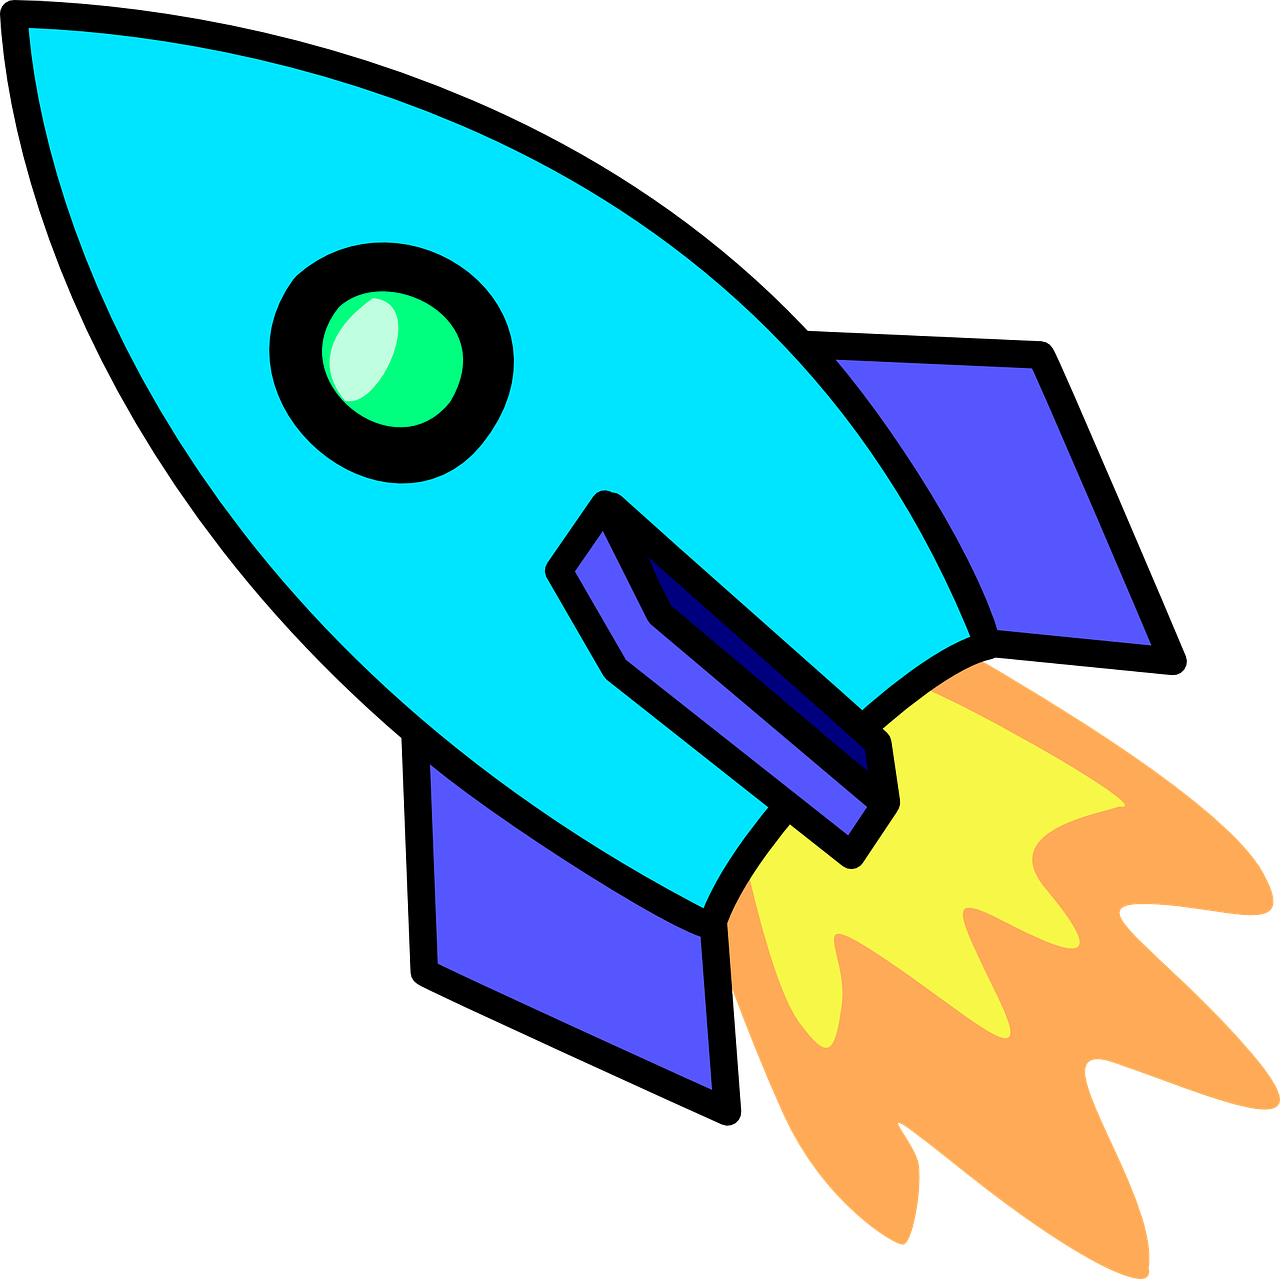 Spacecraft Rocket PNG Clipart